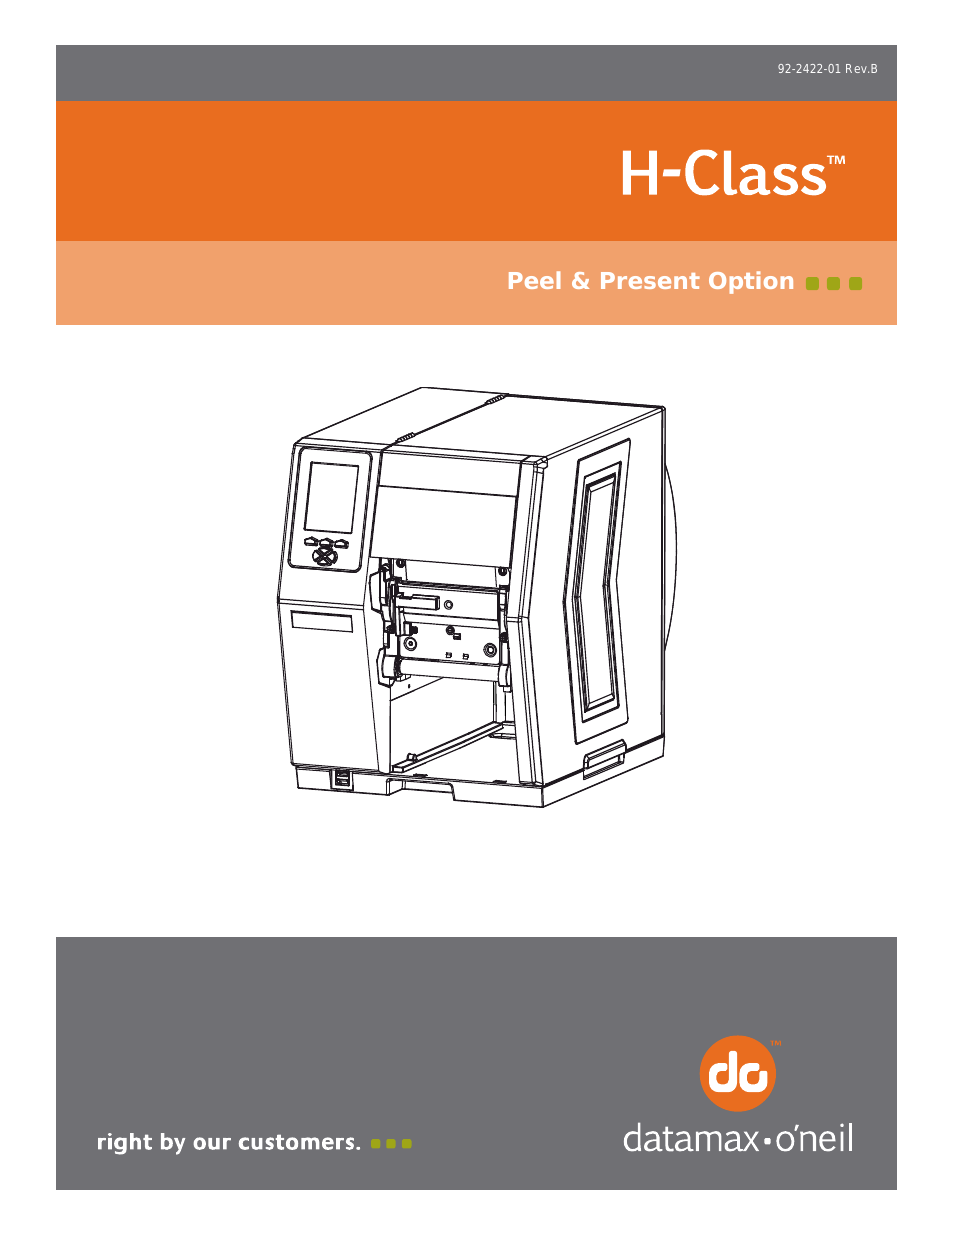 H-Class Peel & Present Option